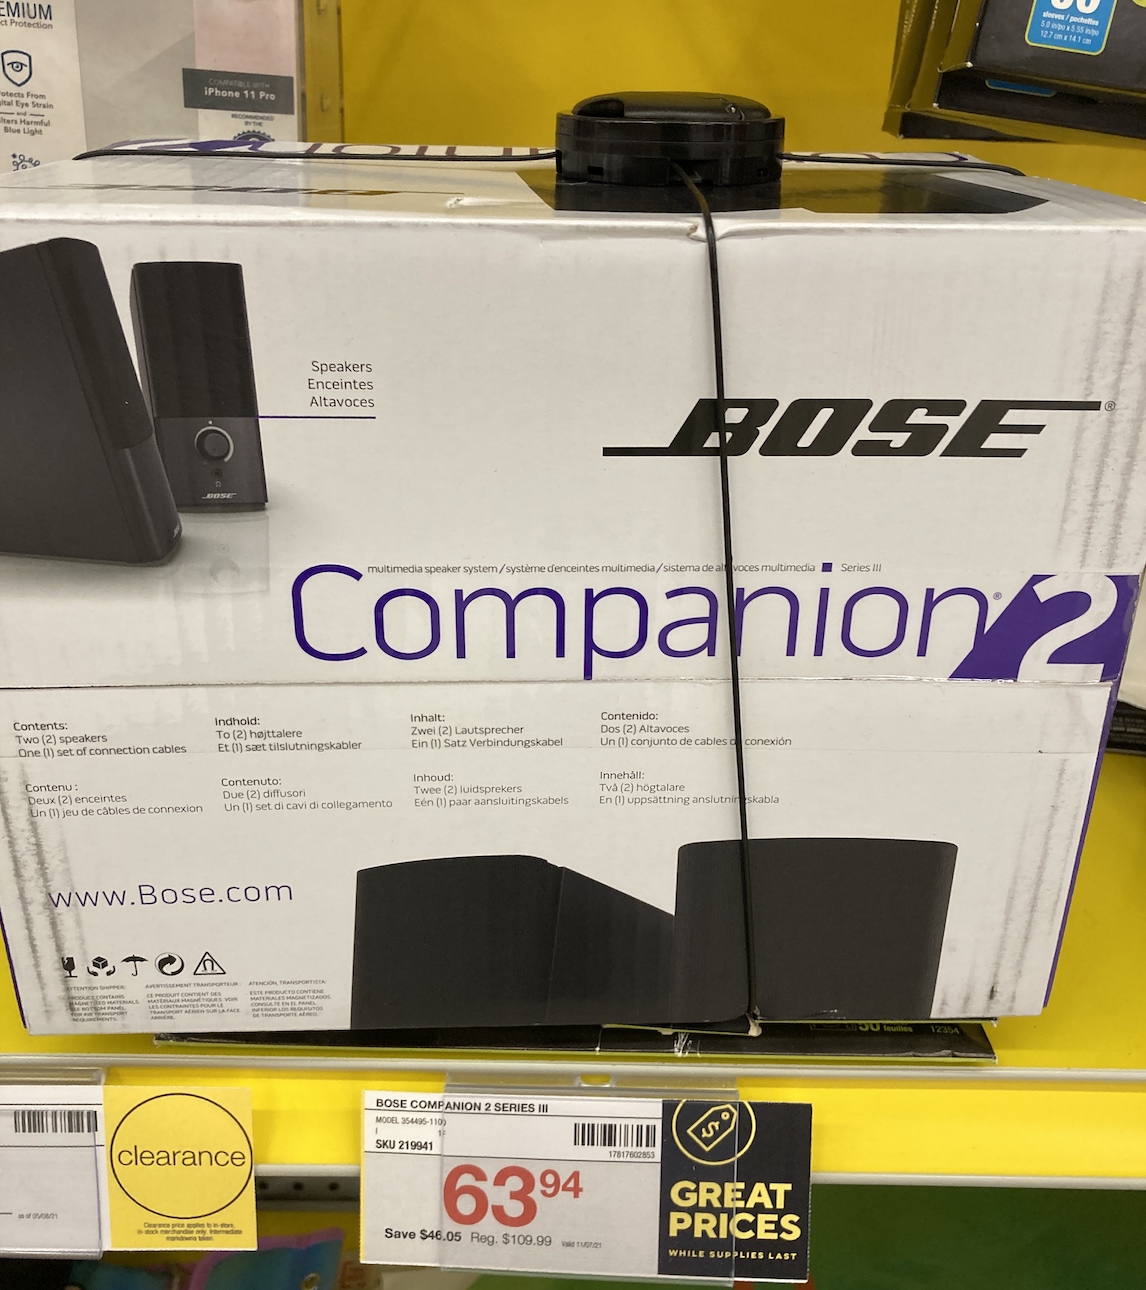 Bose Companion 2 Series III Wired Speaker (354495-1100) on